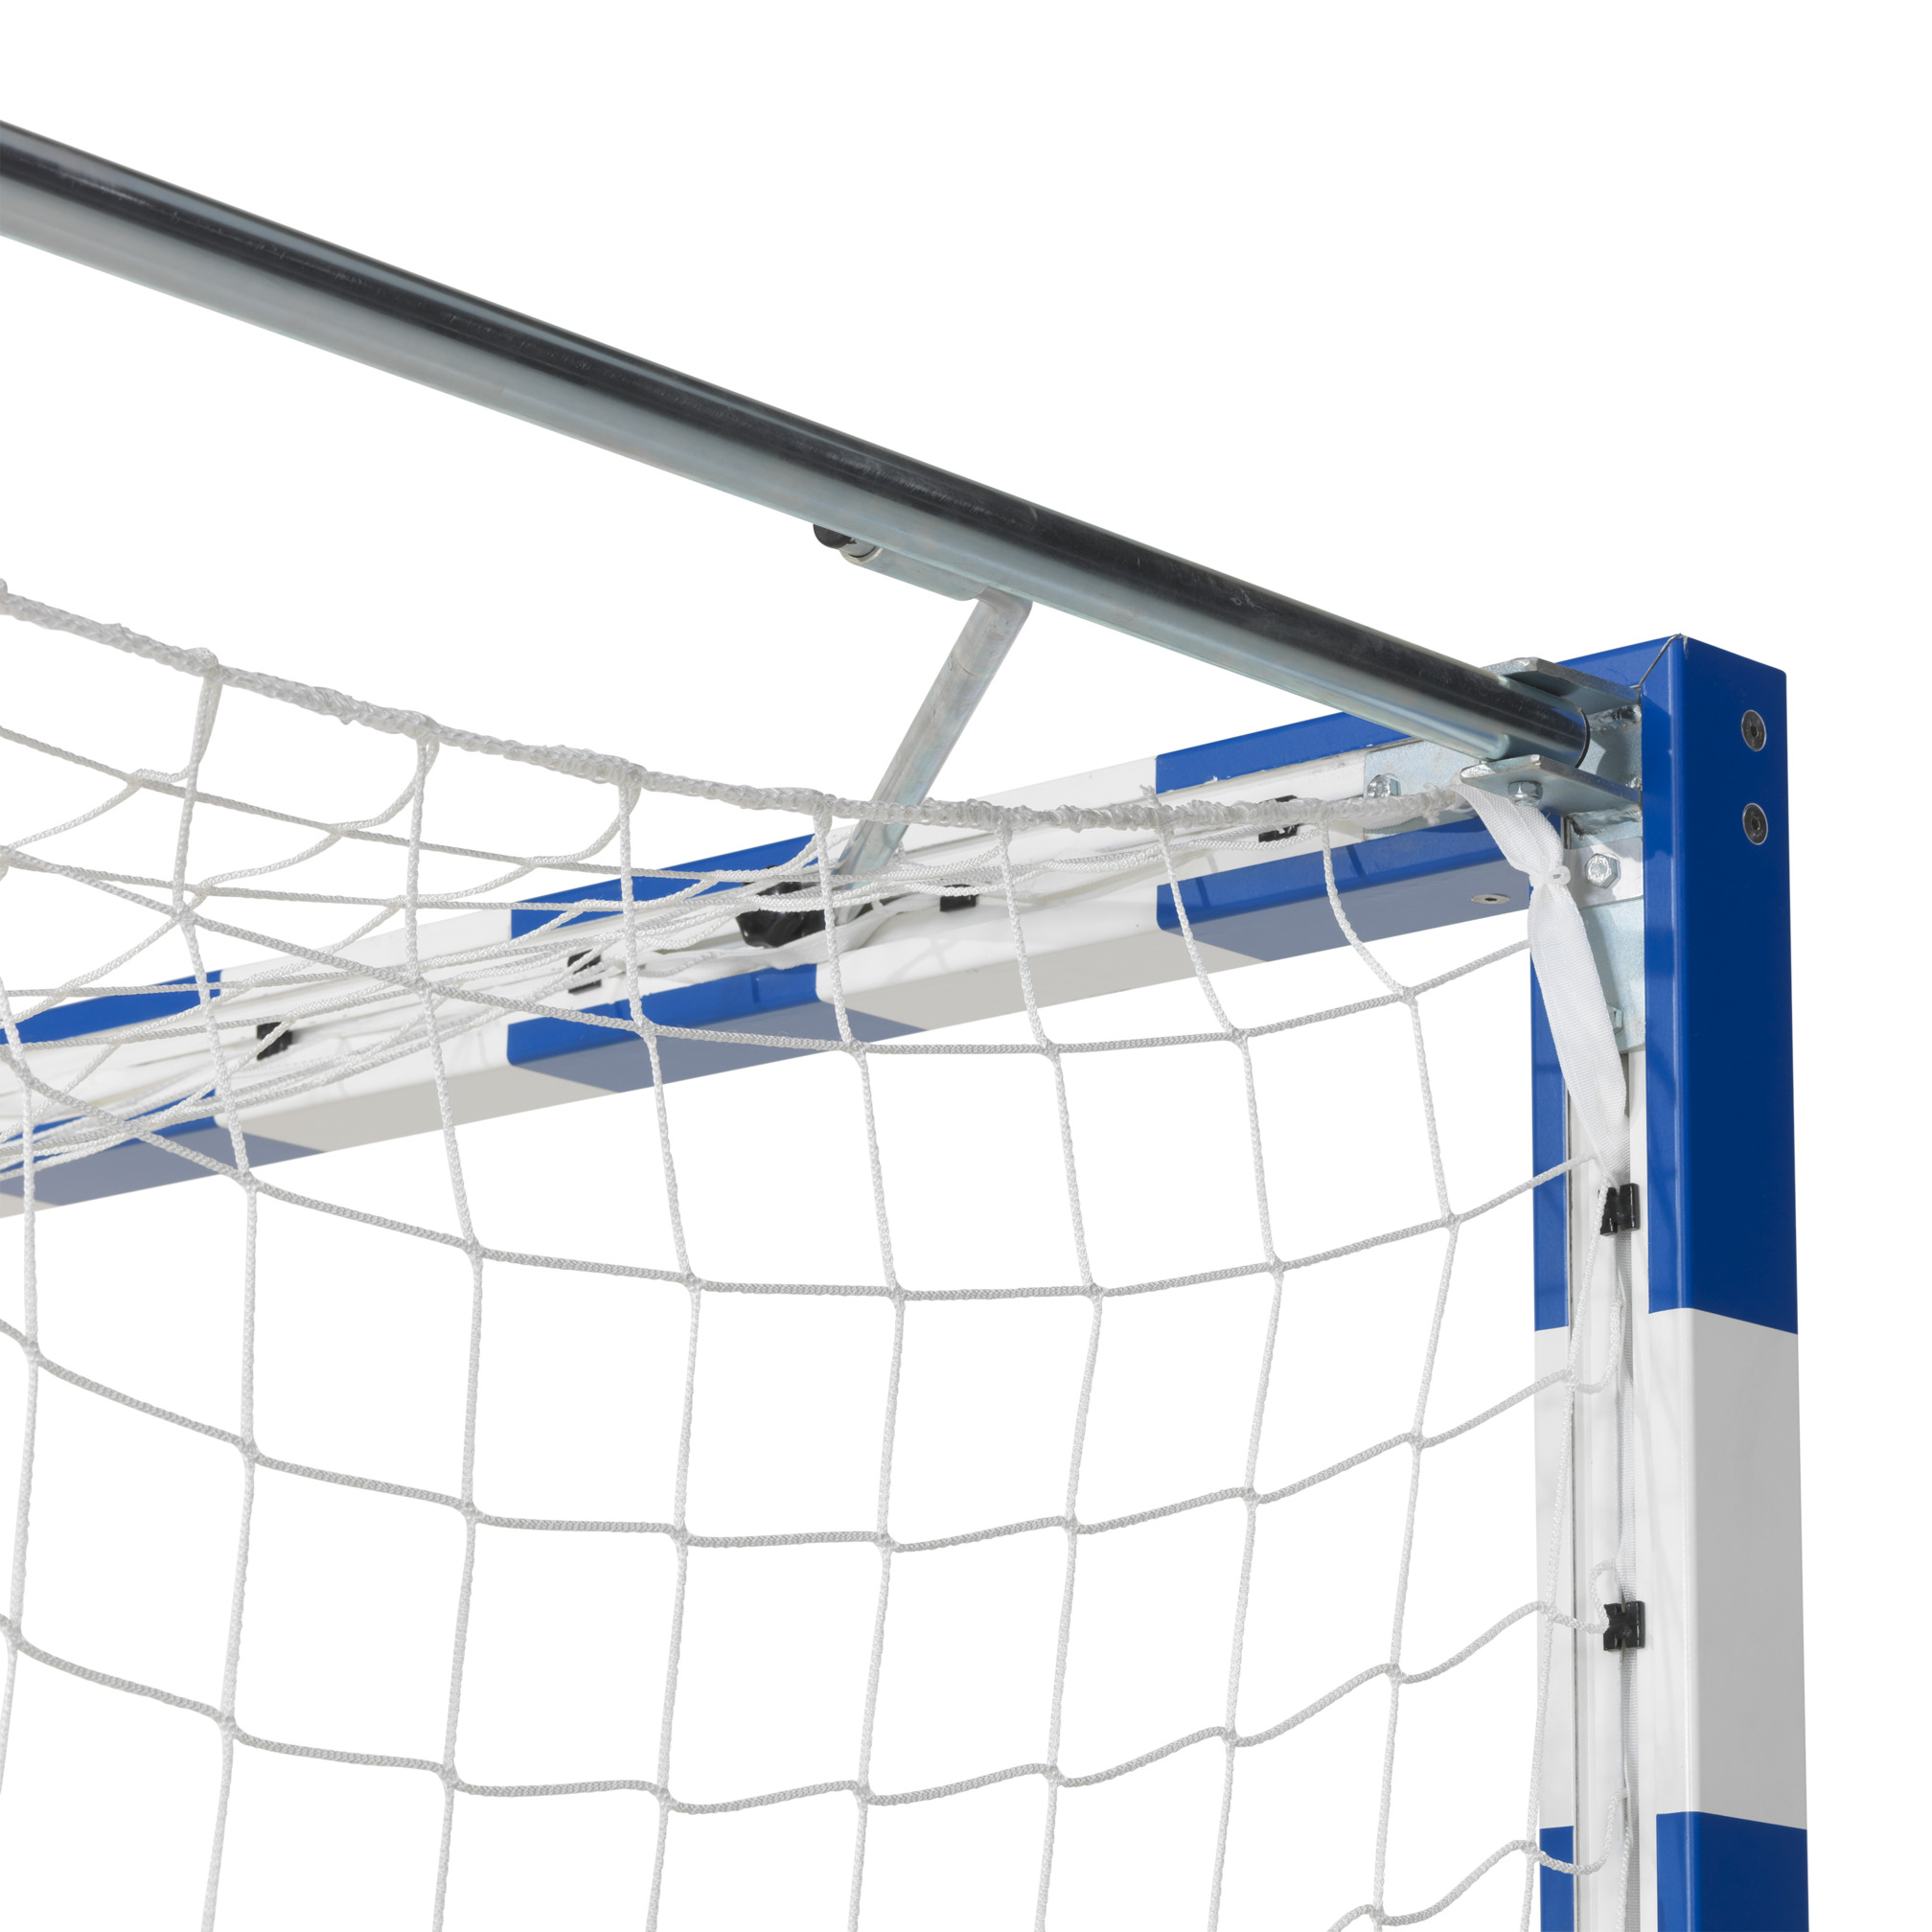 Handball goal IHF with collapsible bracket